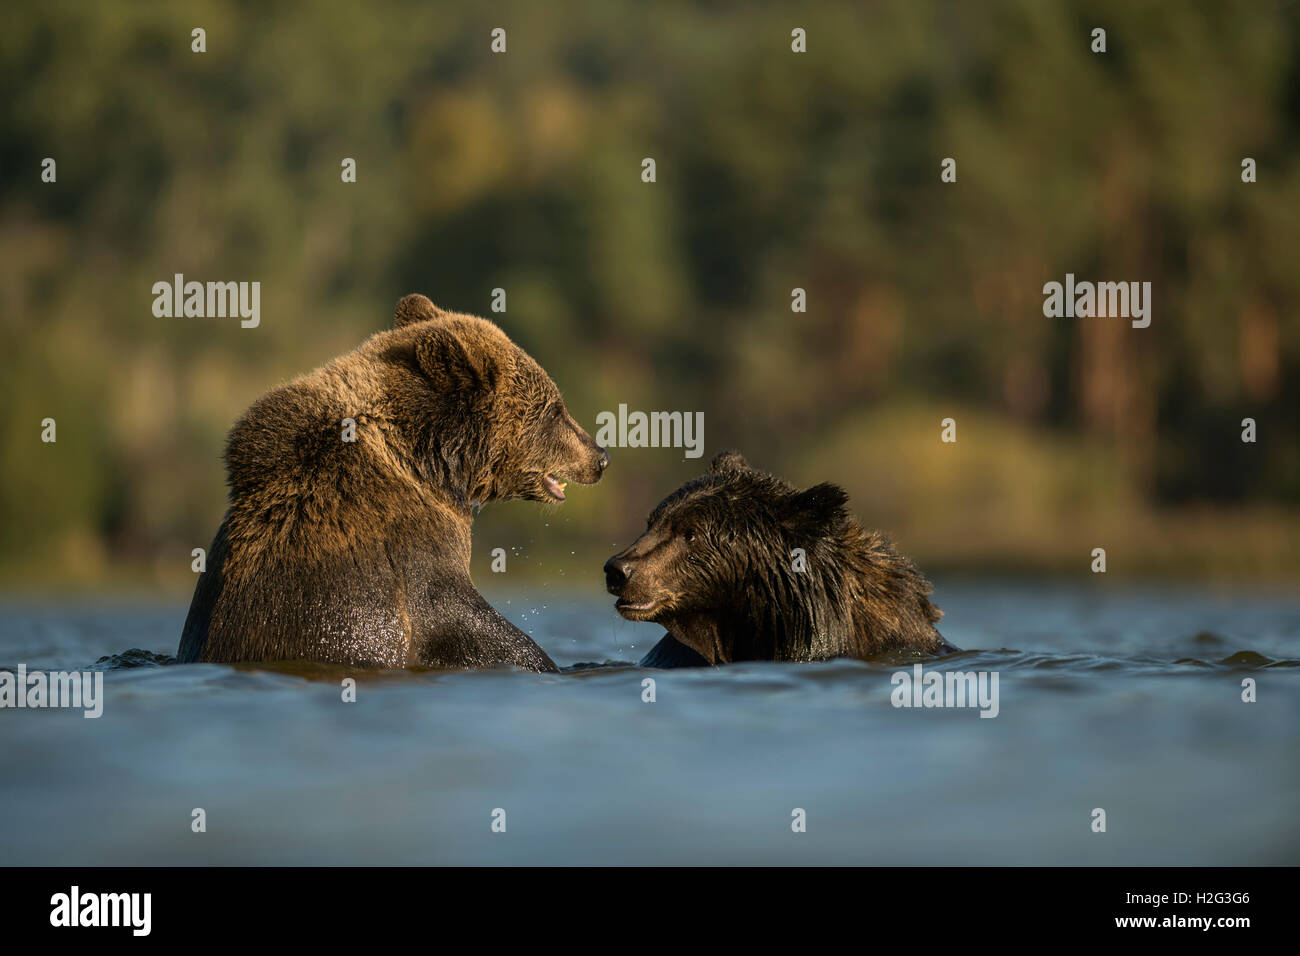 Eurasian Brown Bears / Europaeische Braunbaeren ( Ursus arctos ) in a body of water, playing together, chasing each other. Stock Photo